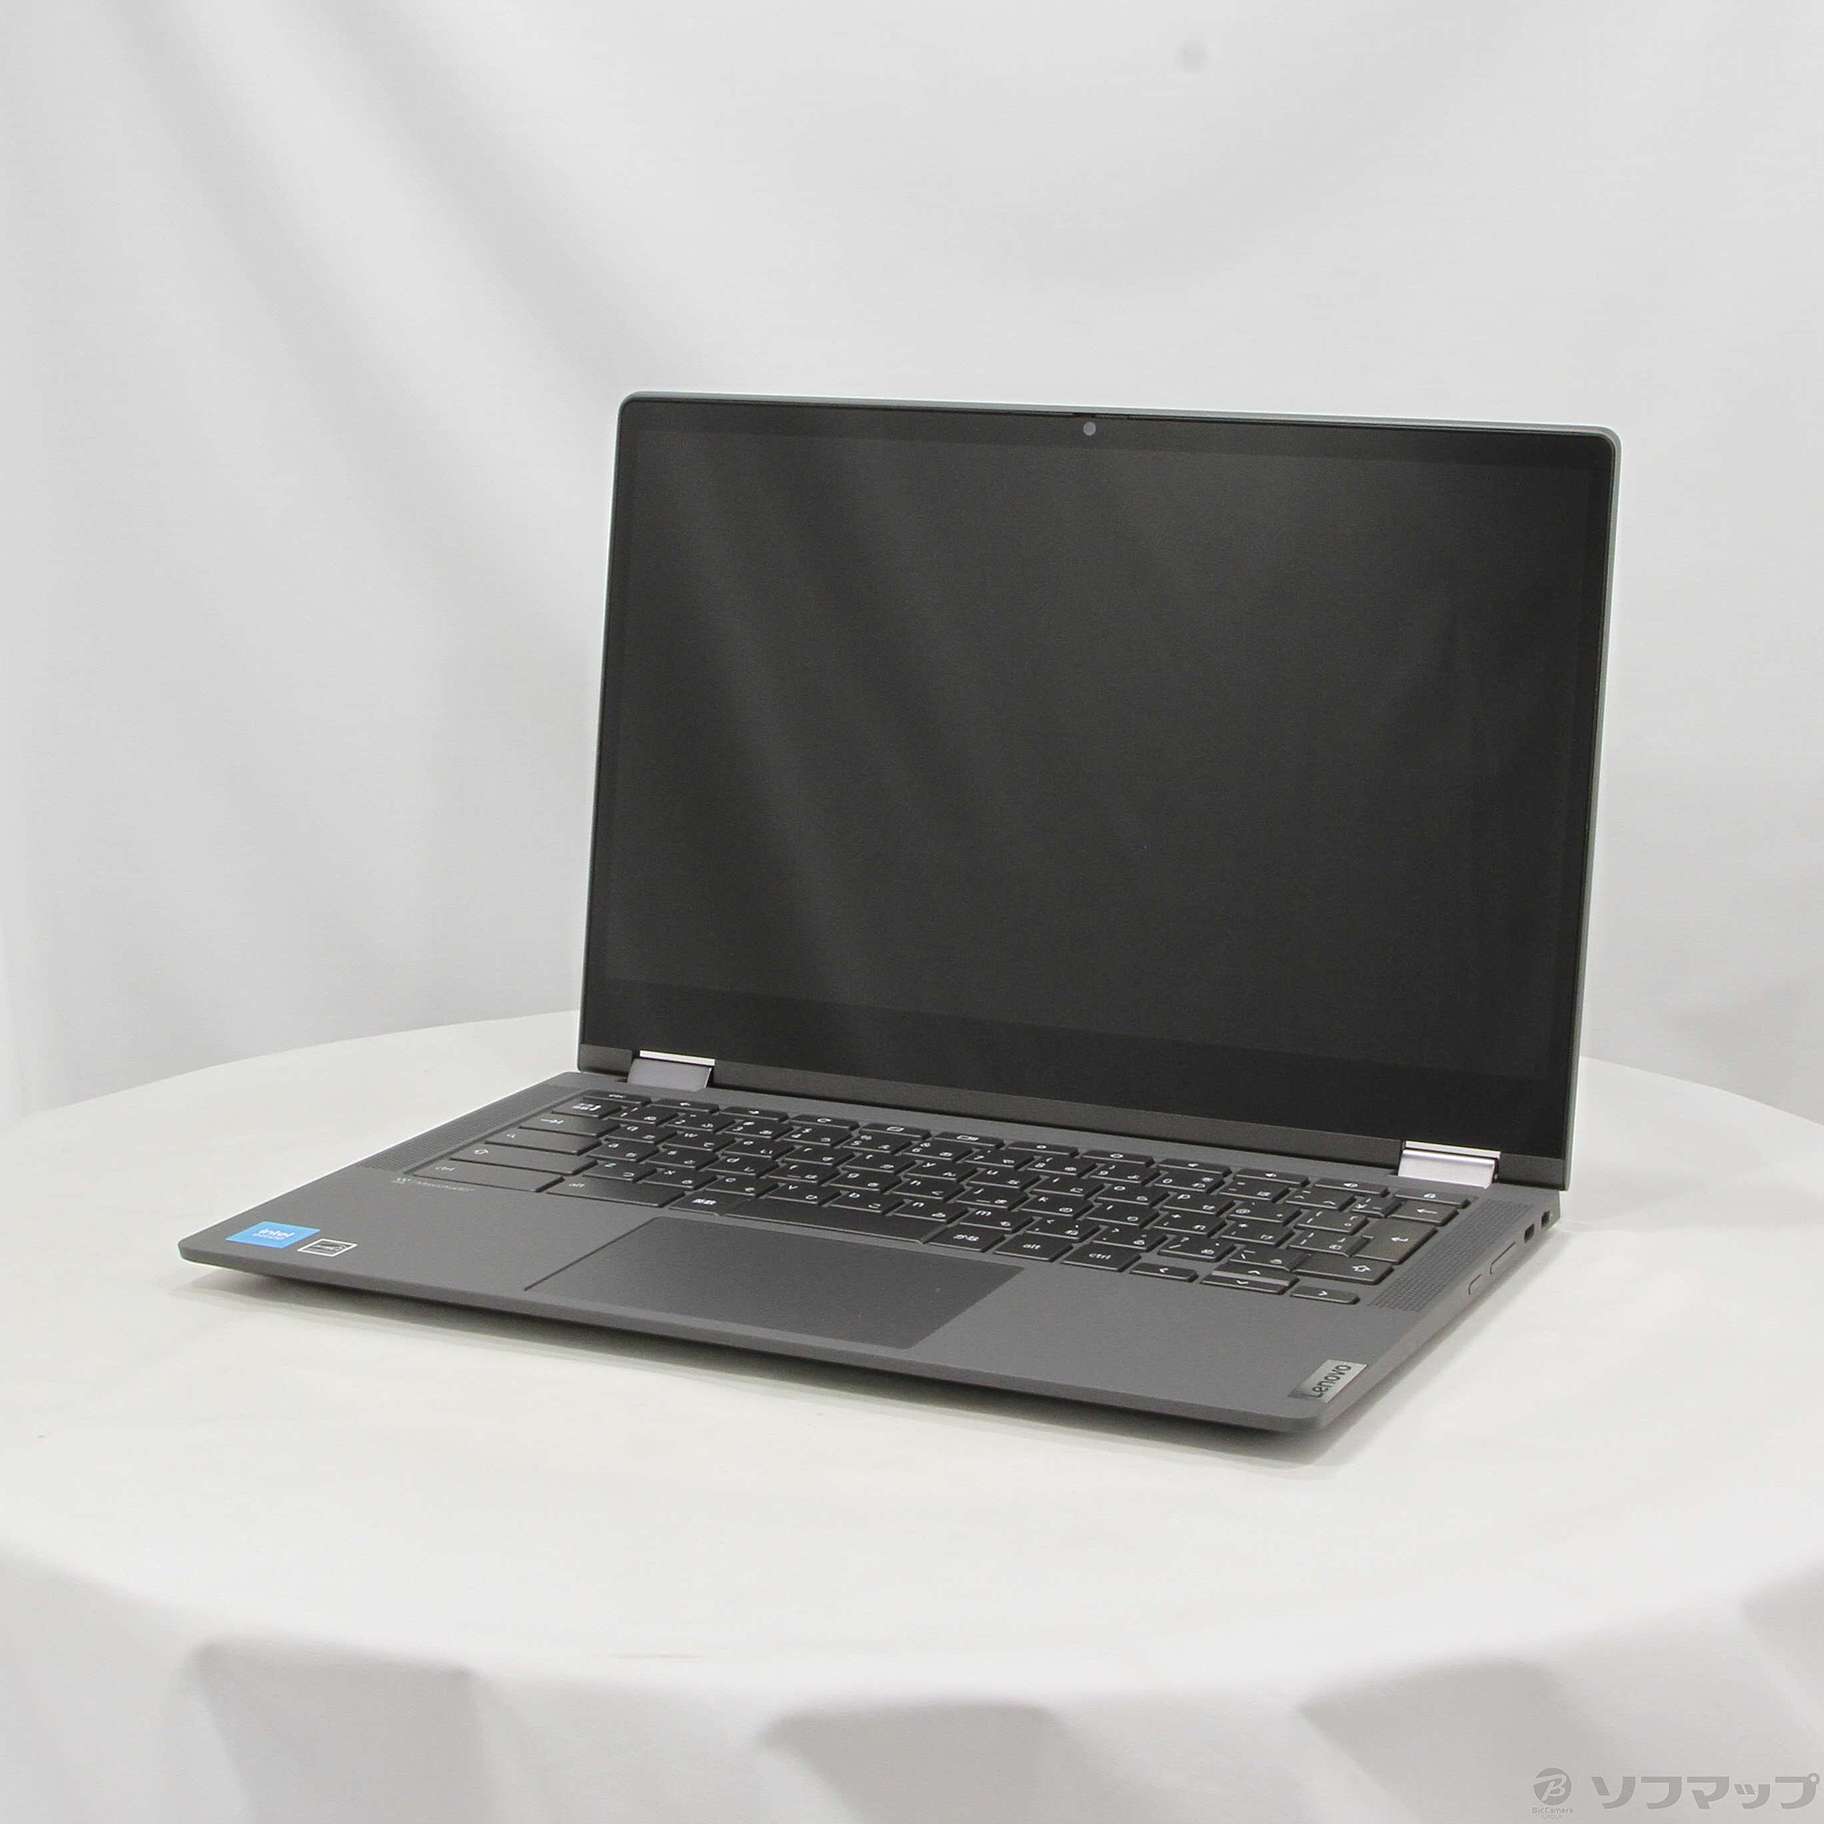 Lenovo ideapad Flex 560i Chromebook